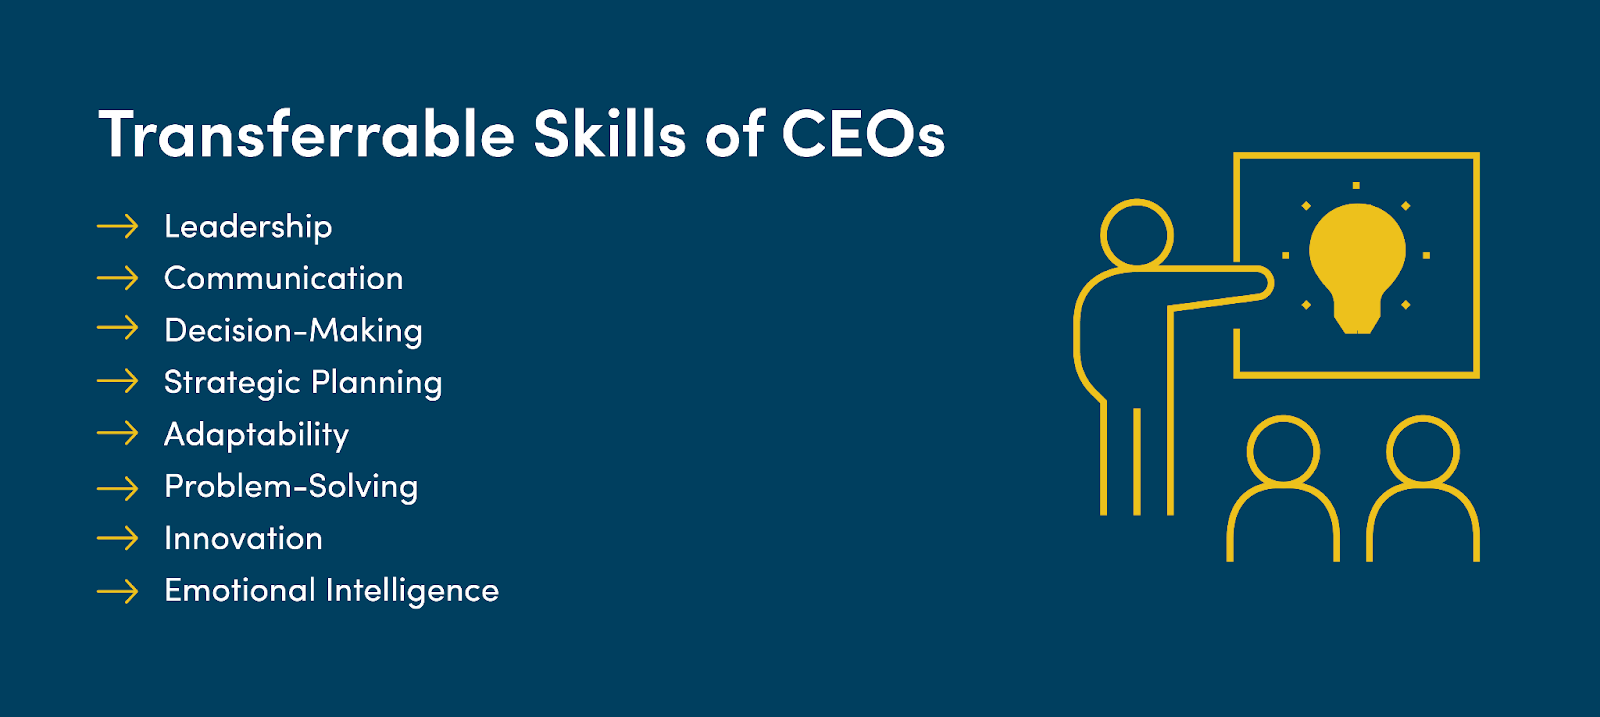 Transferable skills of CEOs